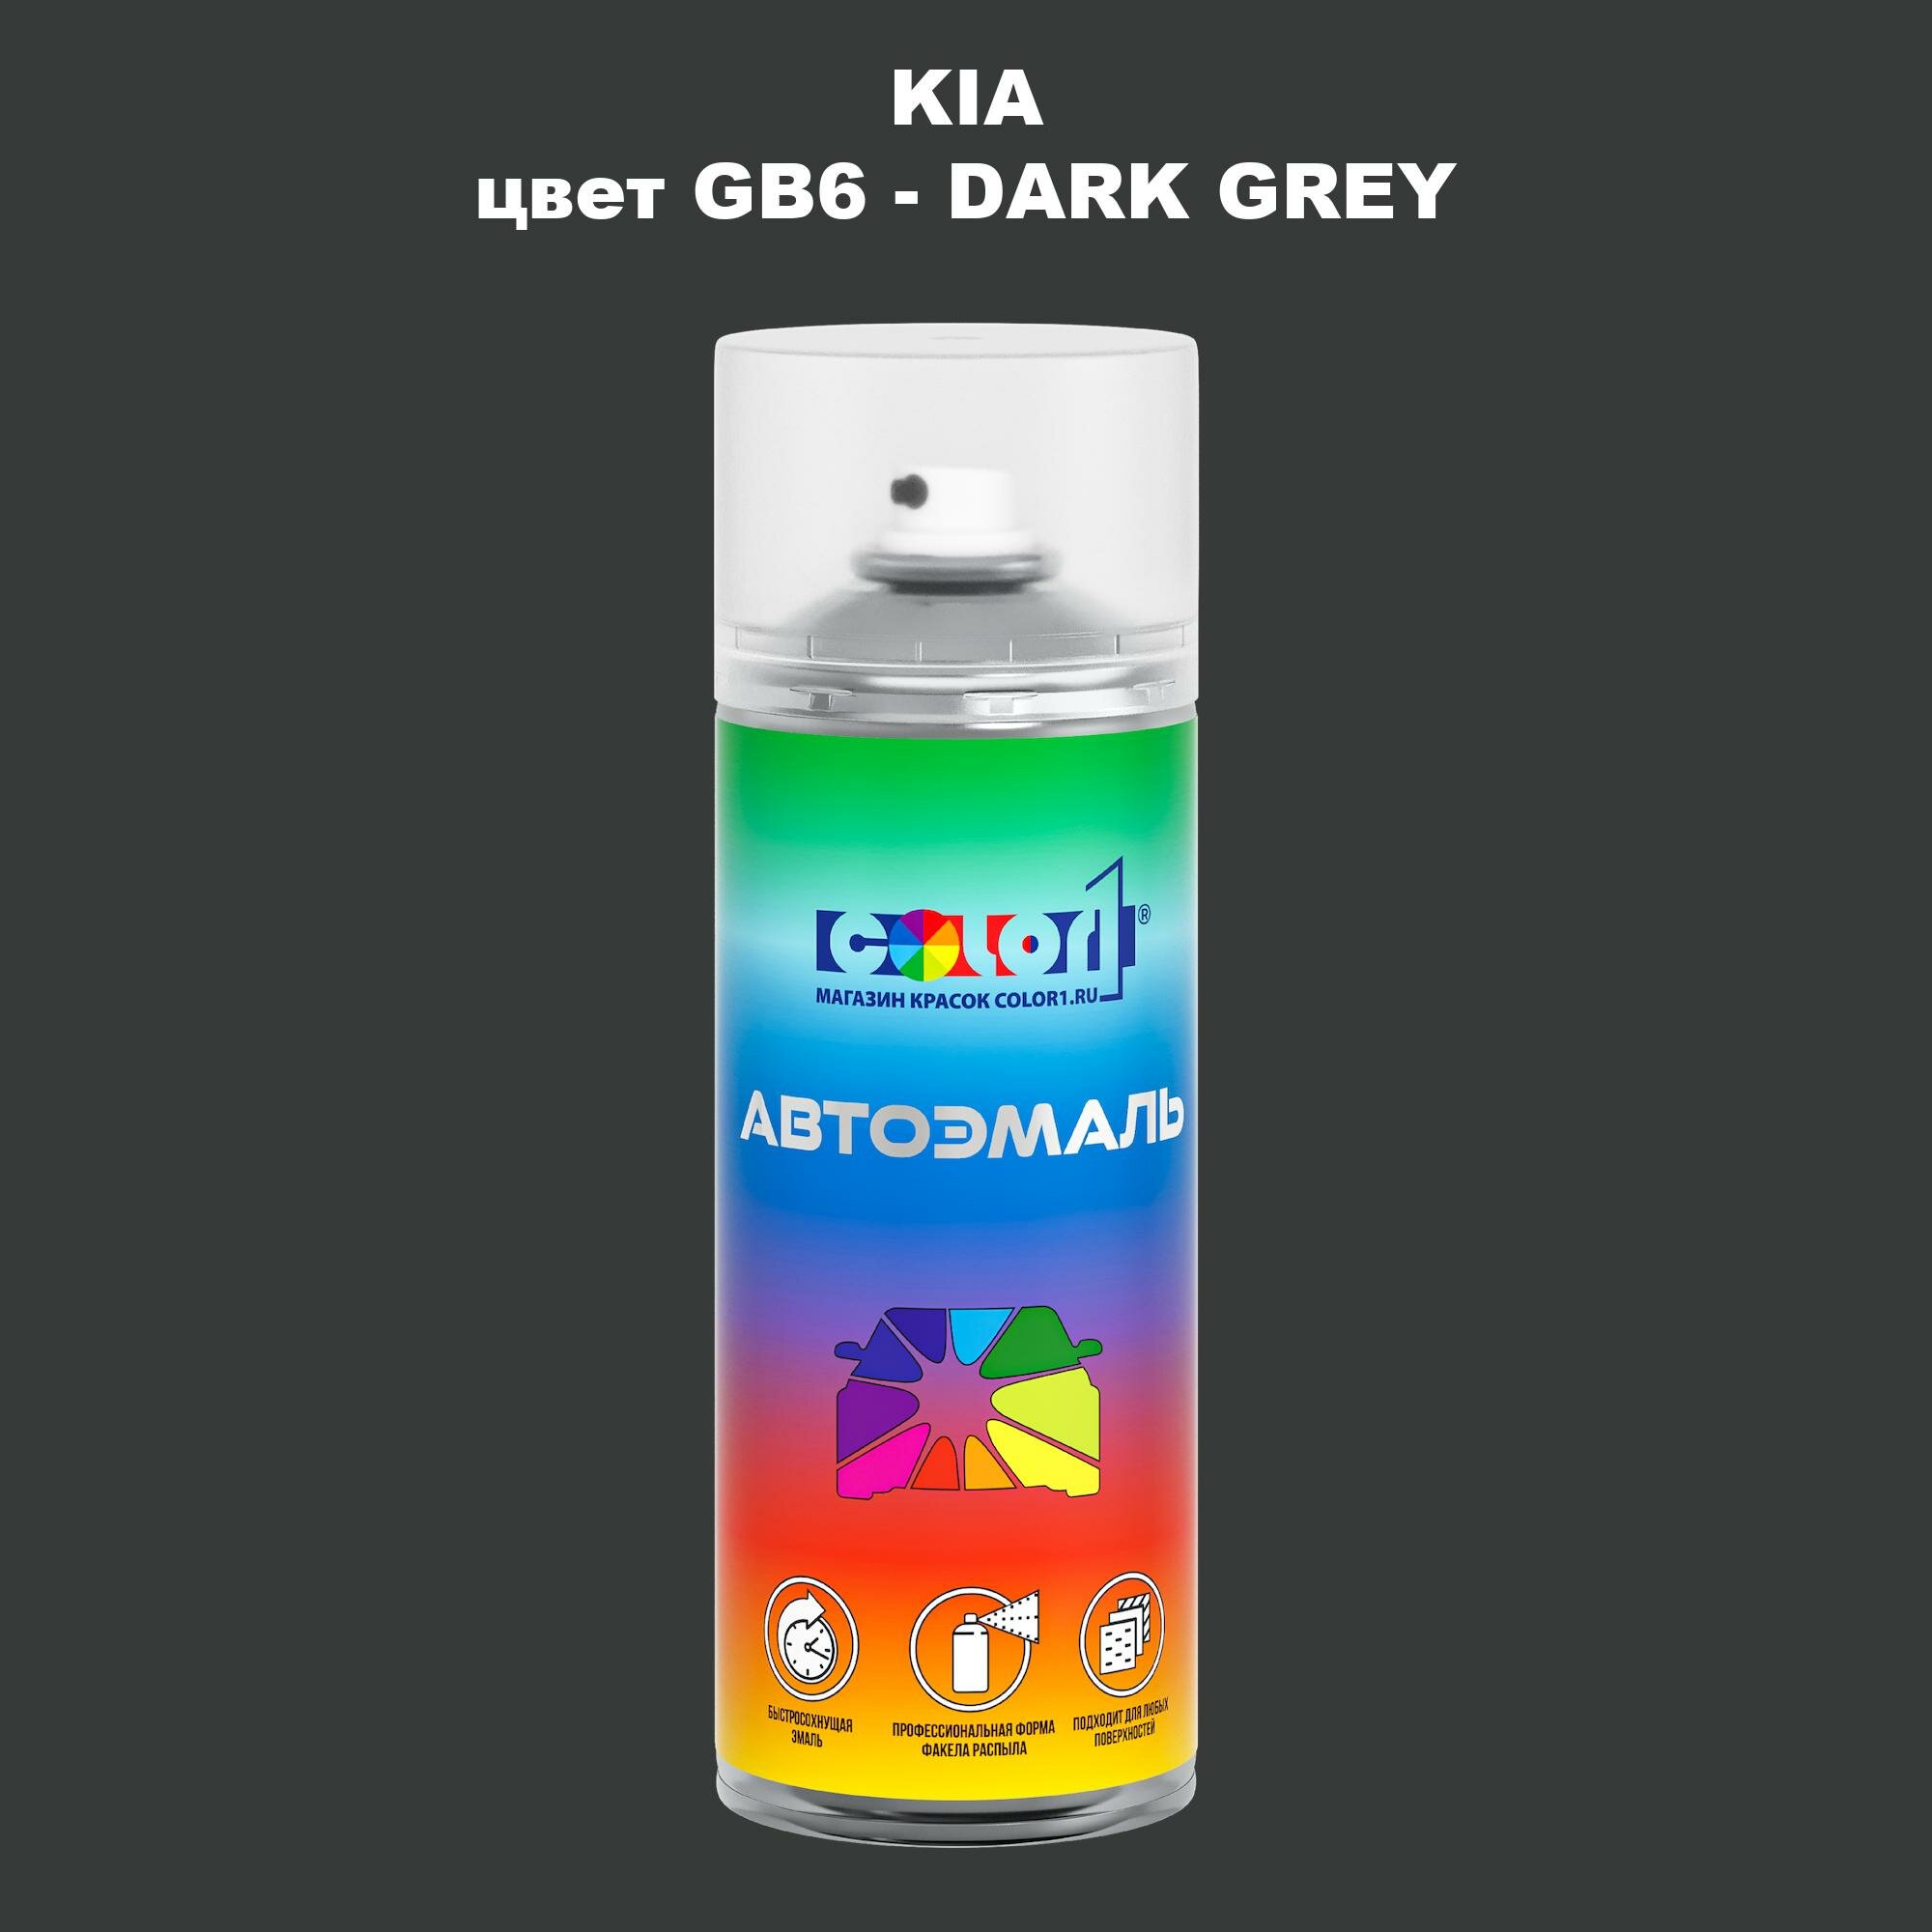 Аэрозольная краска COLOR1 для KIA, цвет GB6 - DARK GREY